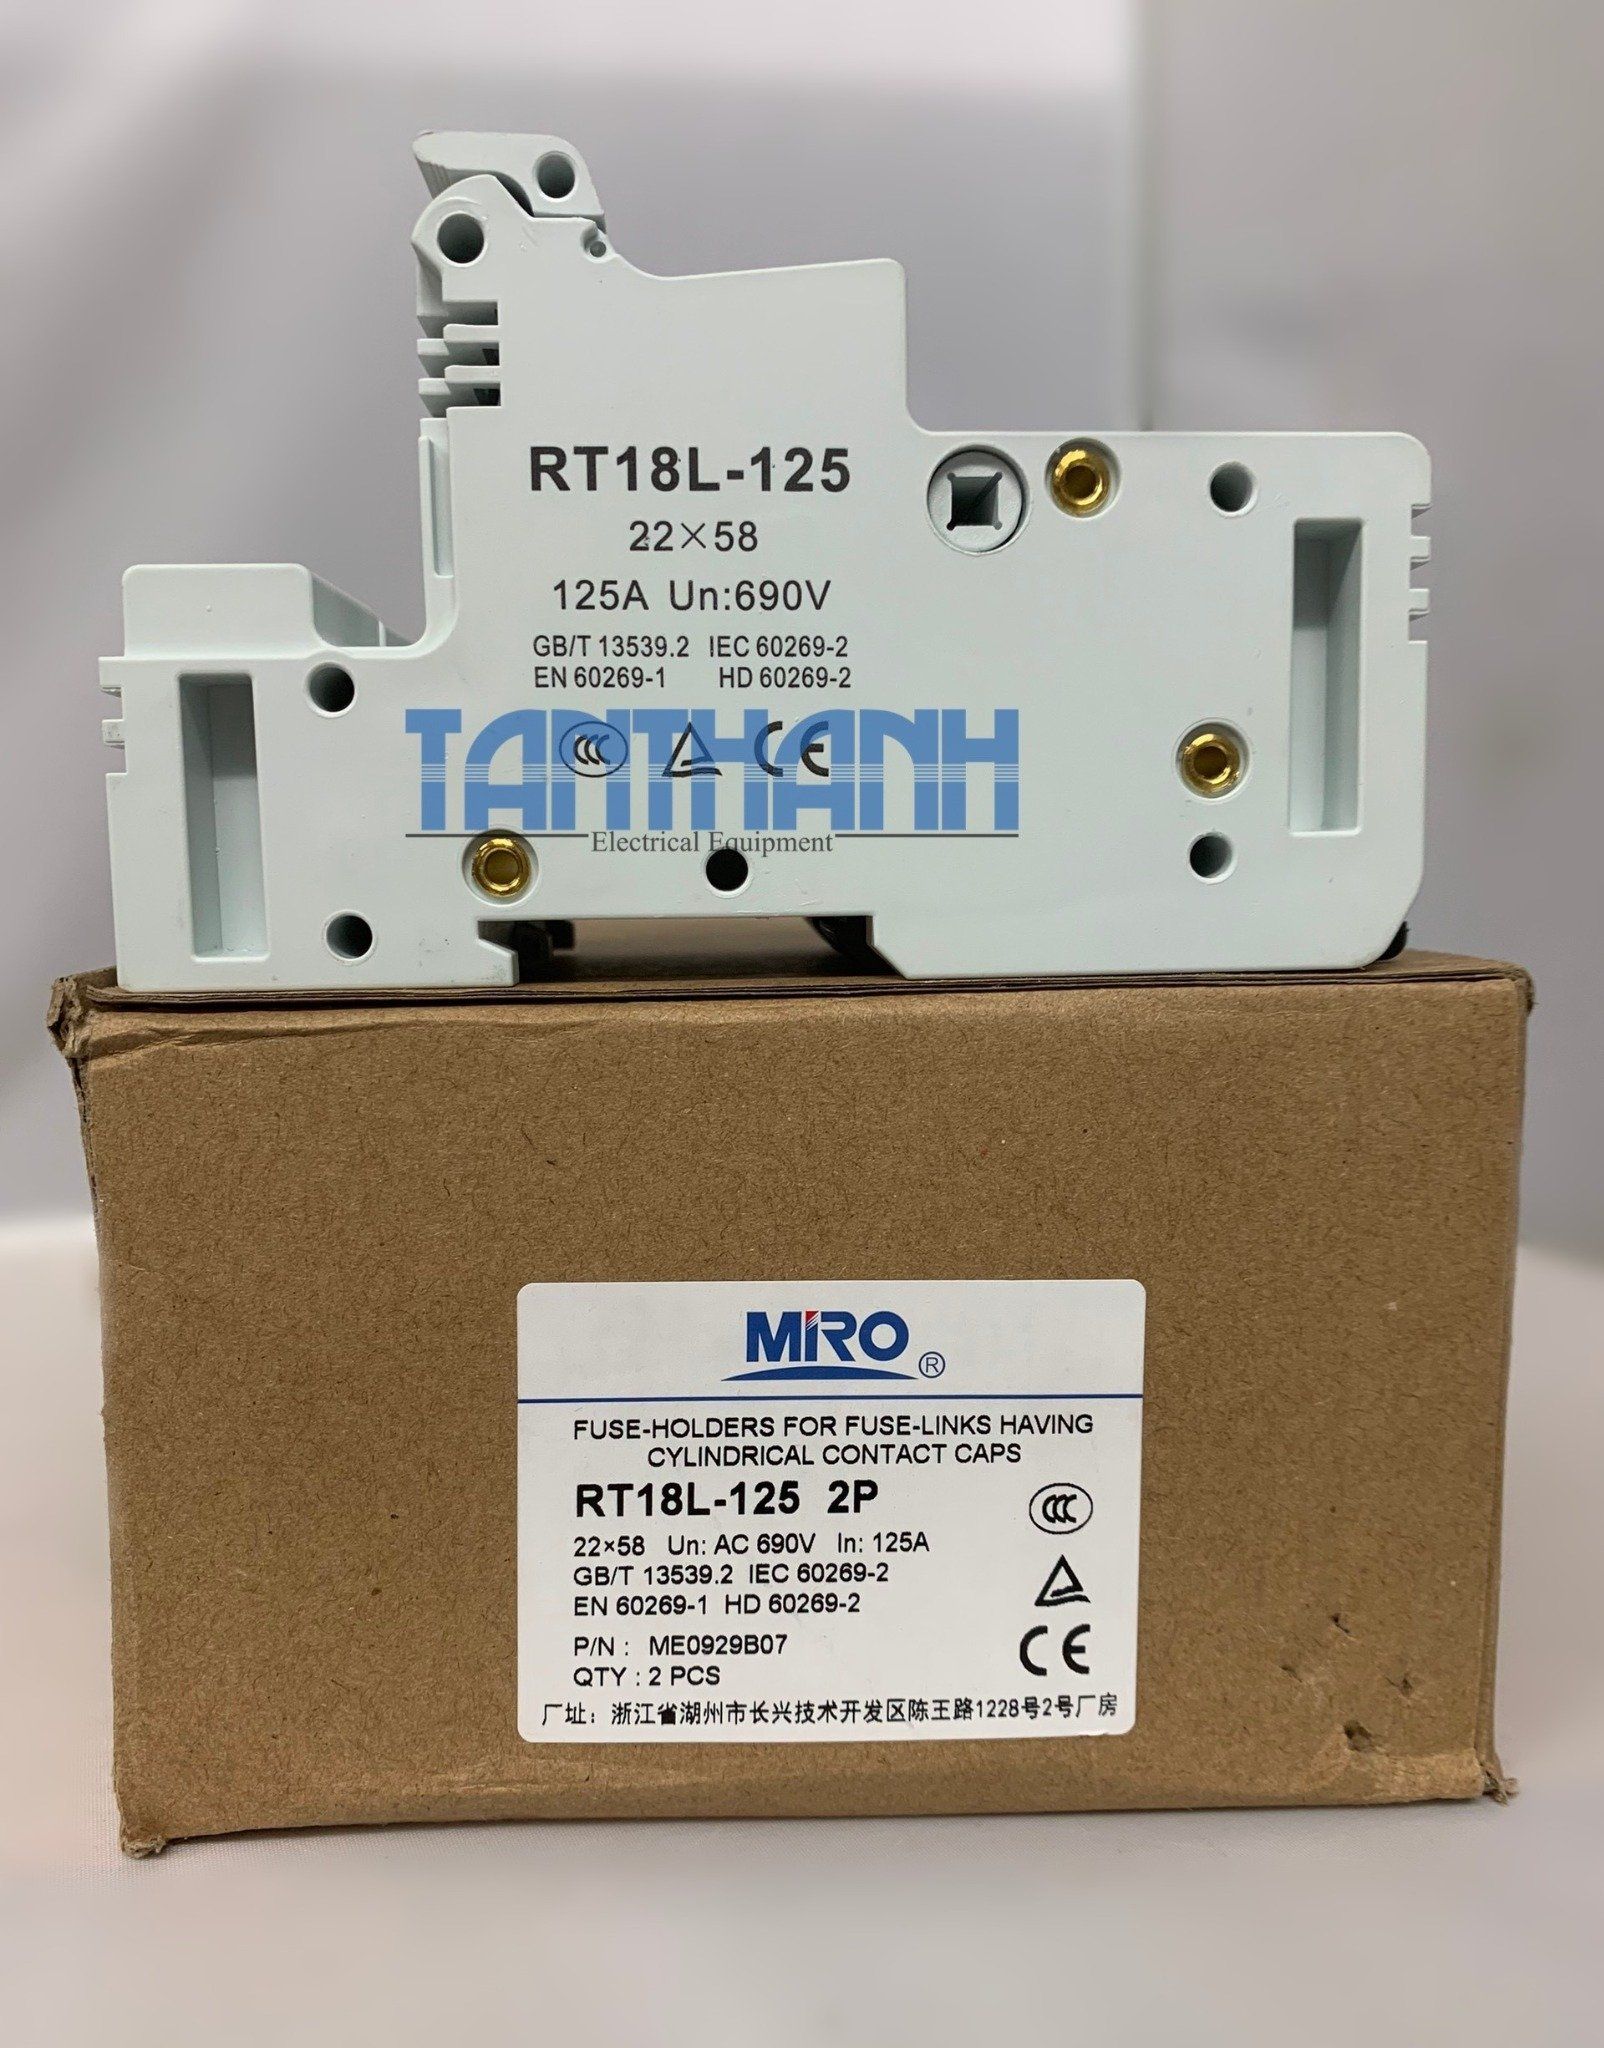 RT18L-125 Miro Fuse Holders